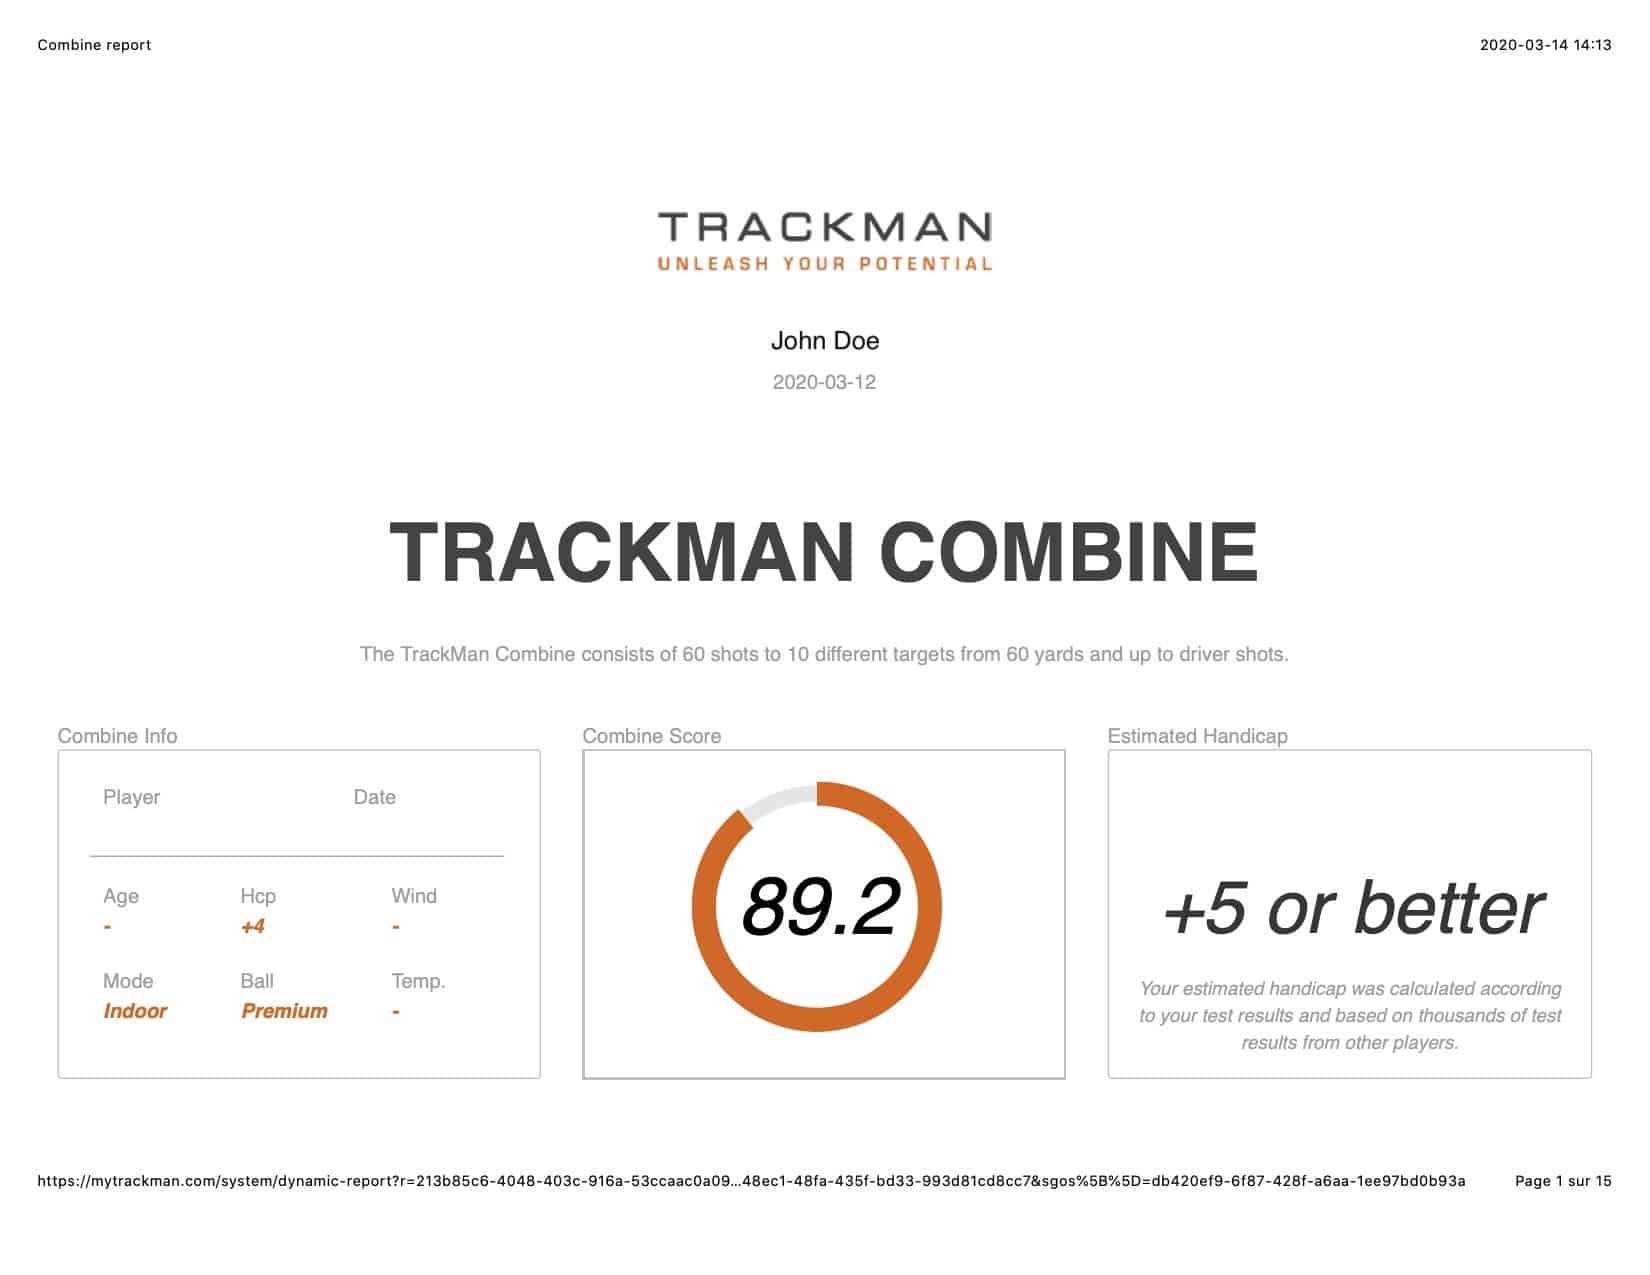 TrackMan Range & Data @ Le Golf Club